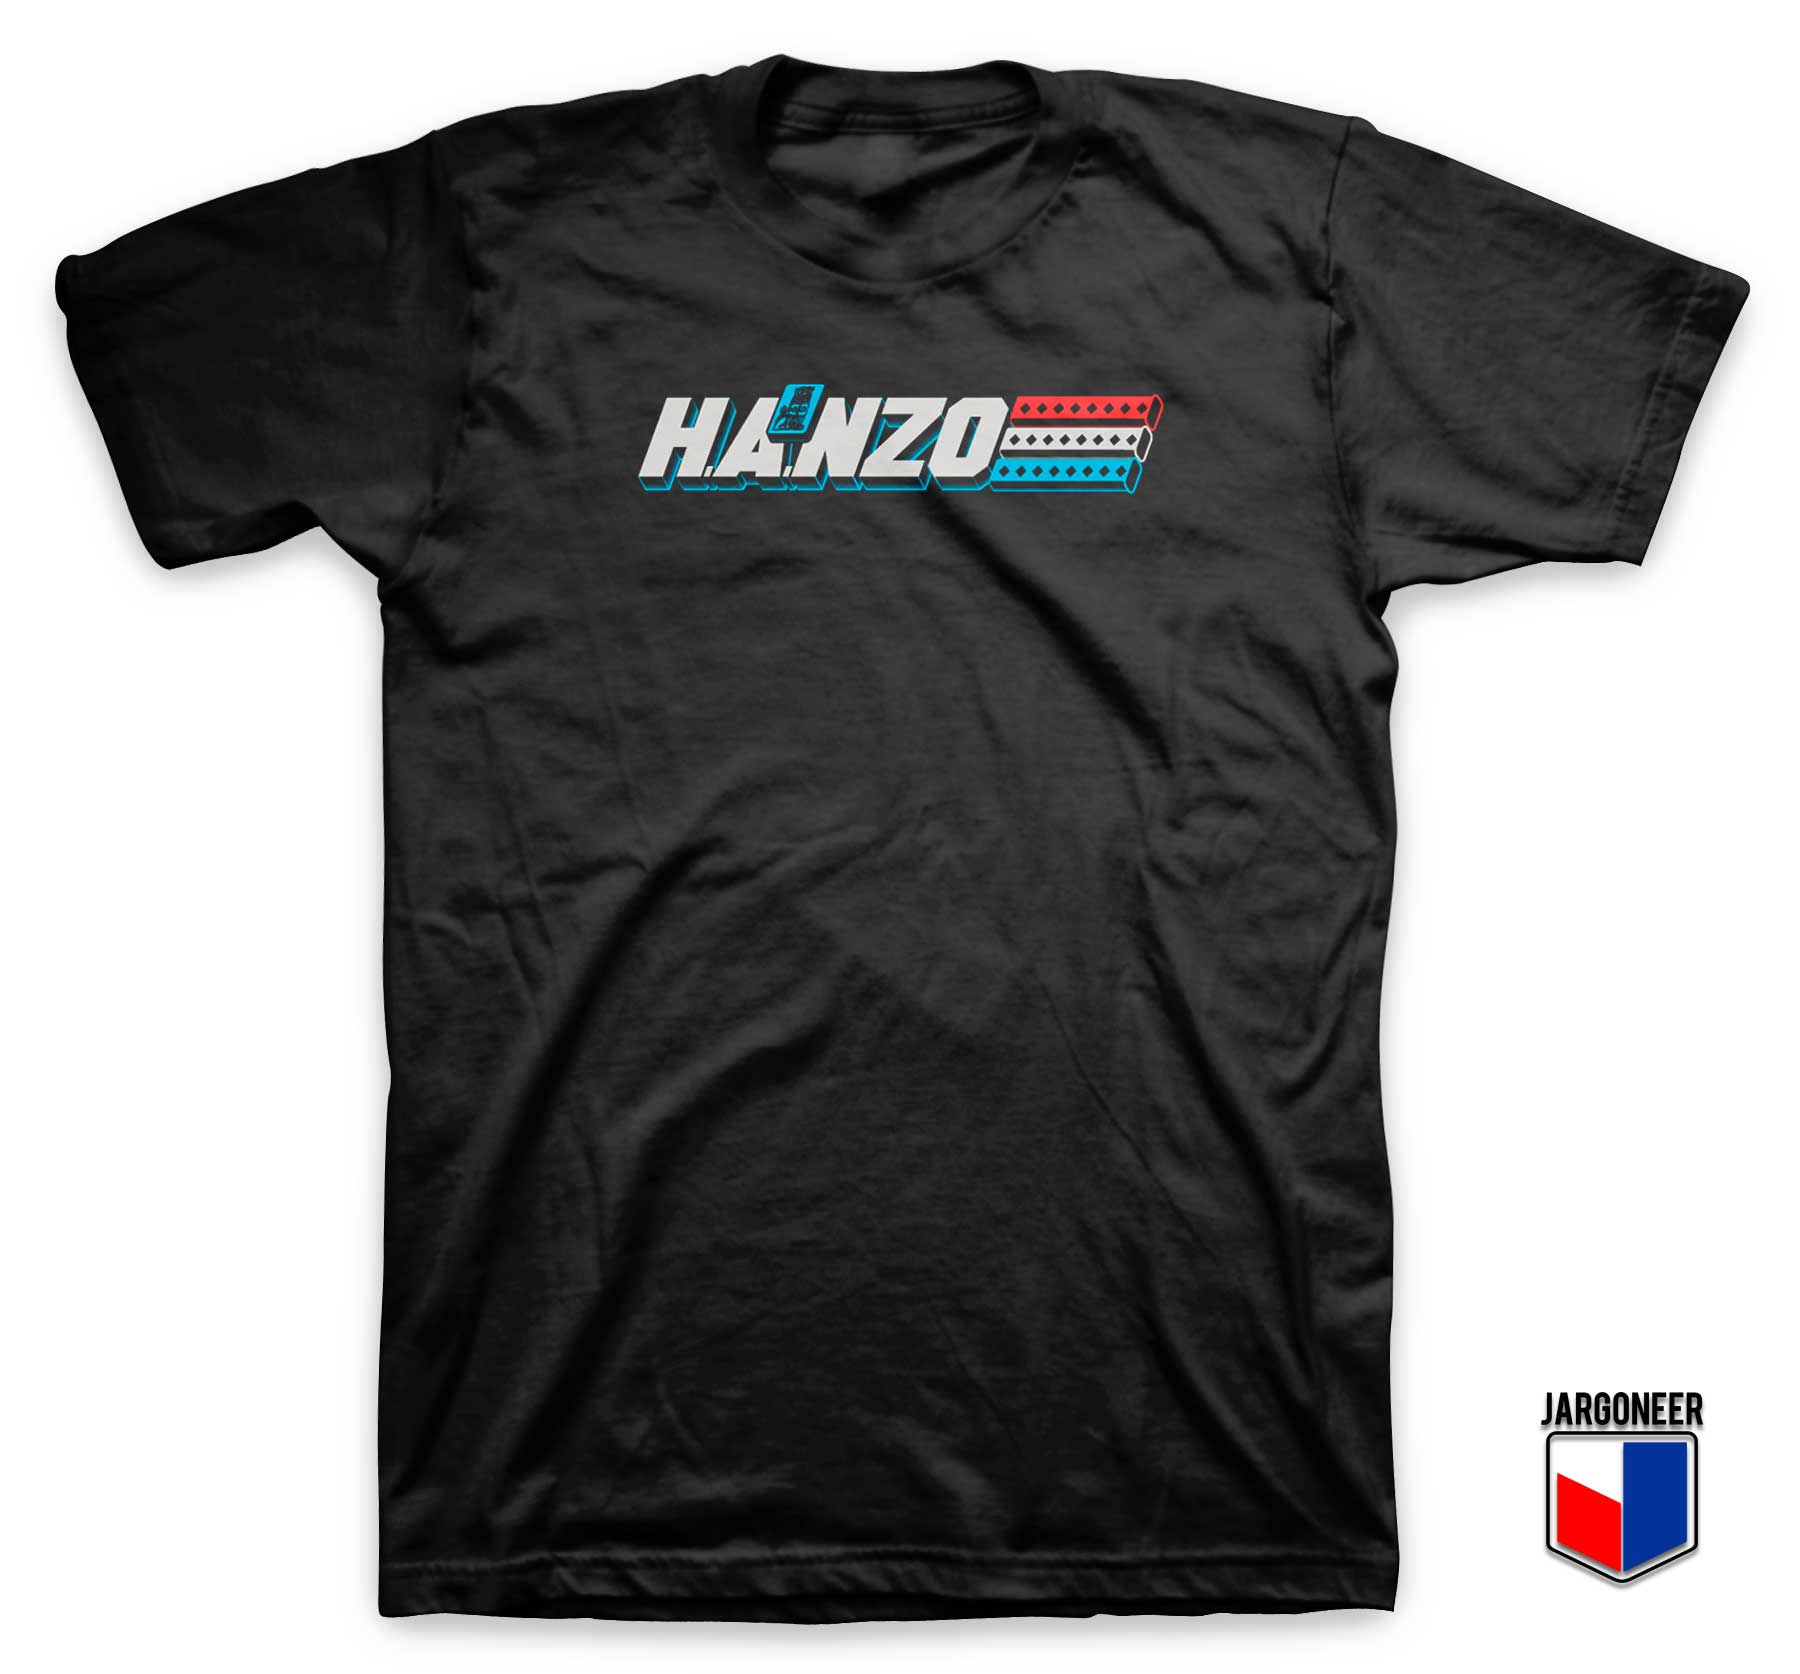 Hattori Hanzo G.I. Joe Logo T shirt - Shop Unique Graphic Cool Shirt Designs